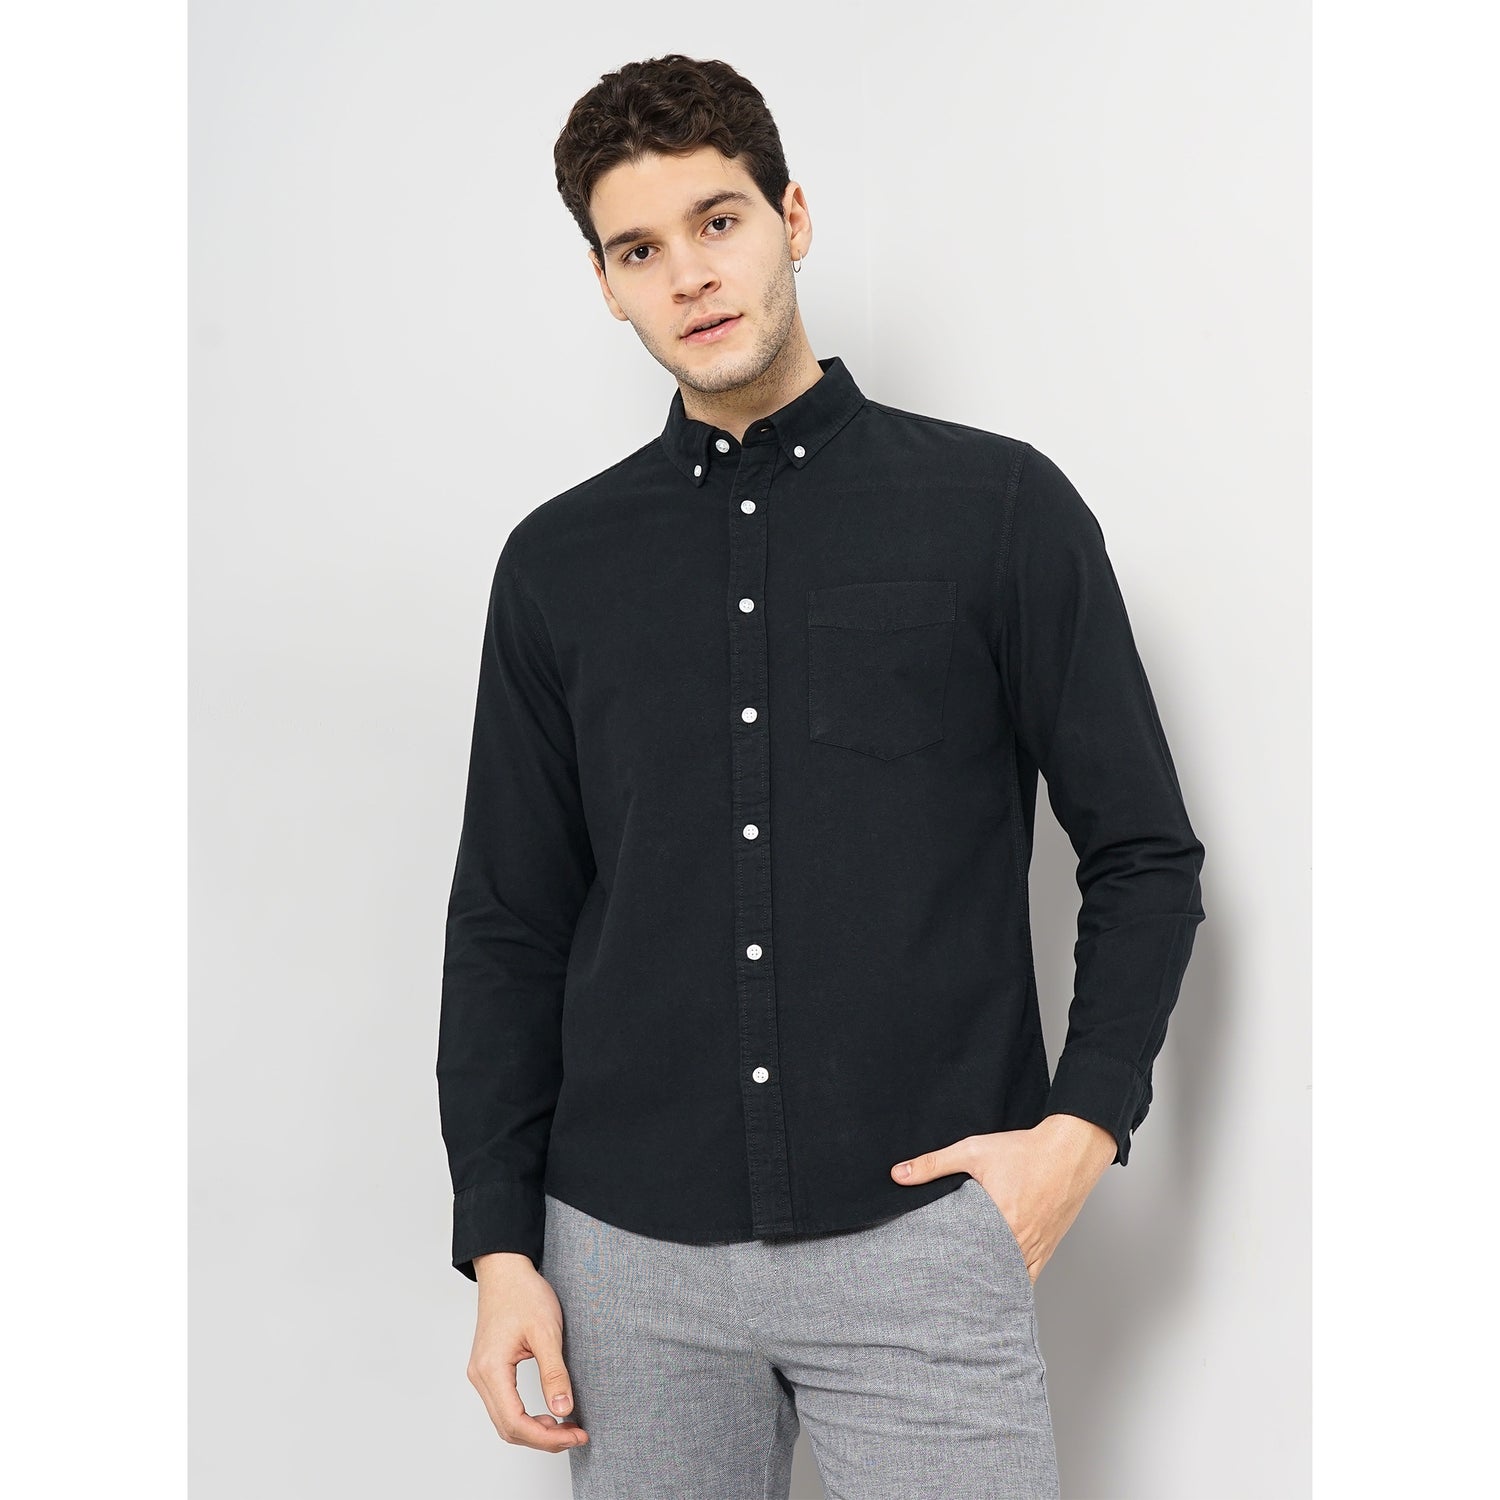 Men Black Solid Regular Fit Cotton Hi Stake Social Oxford Casual Shirt (DAXFORD1)